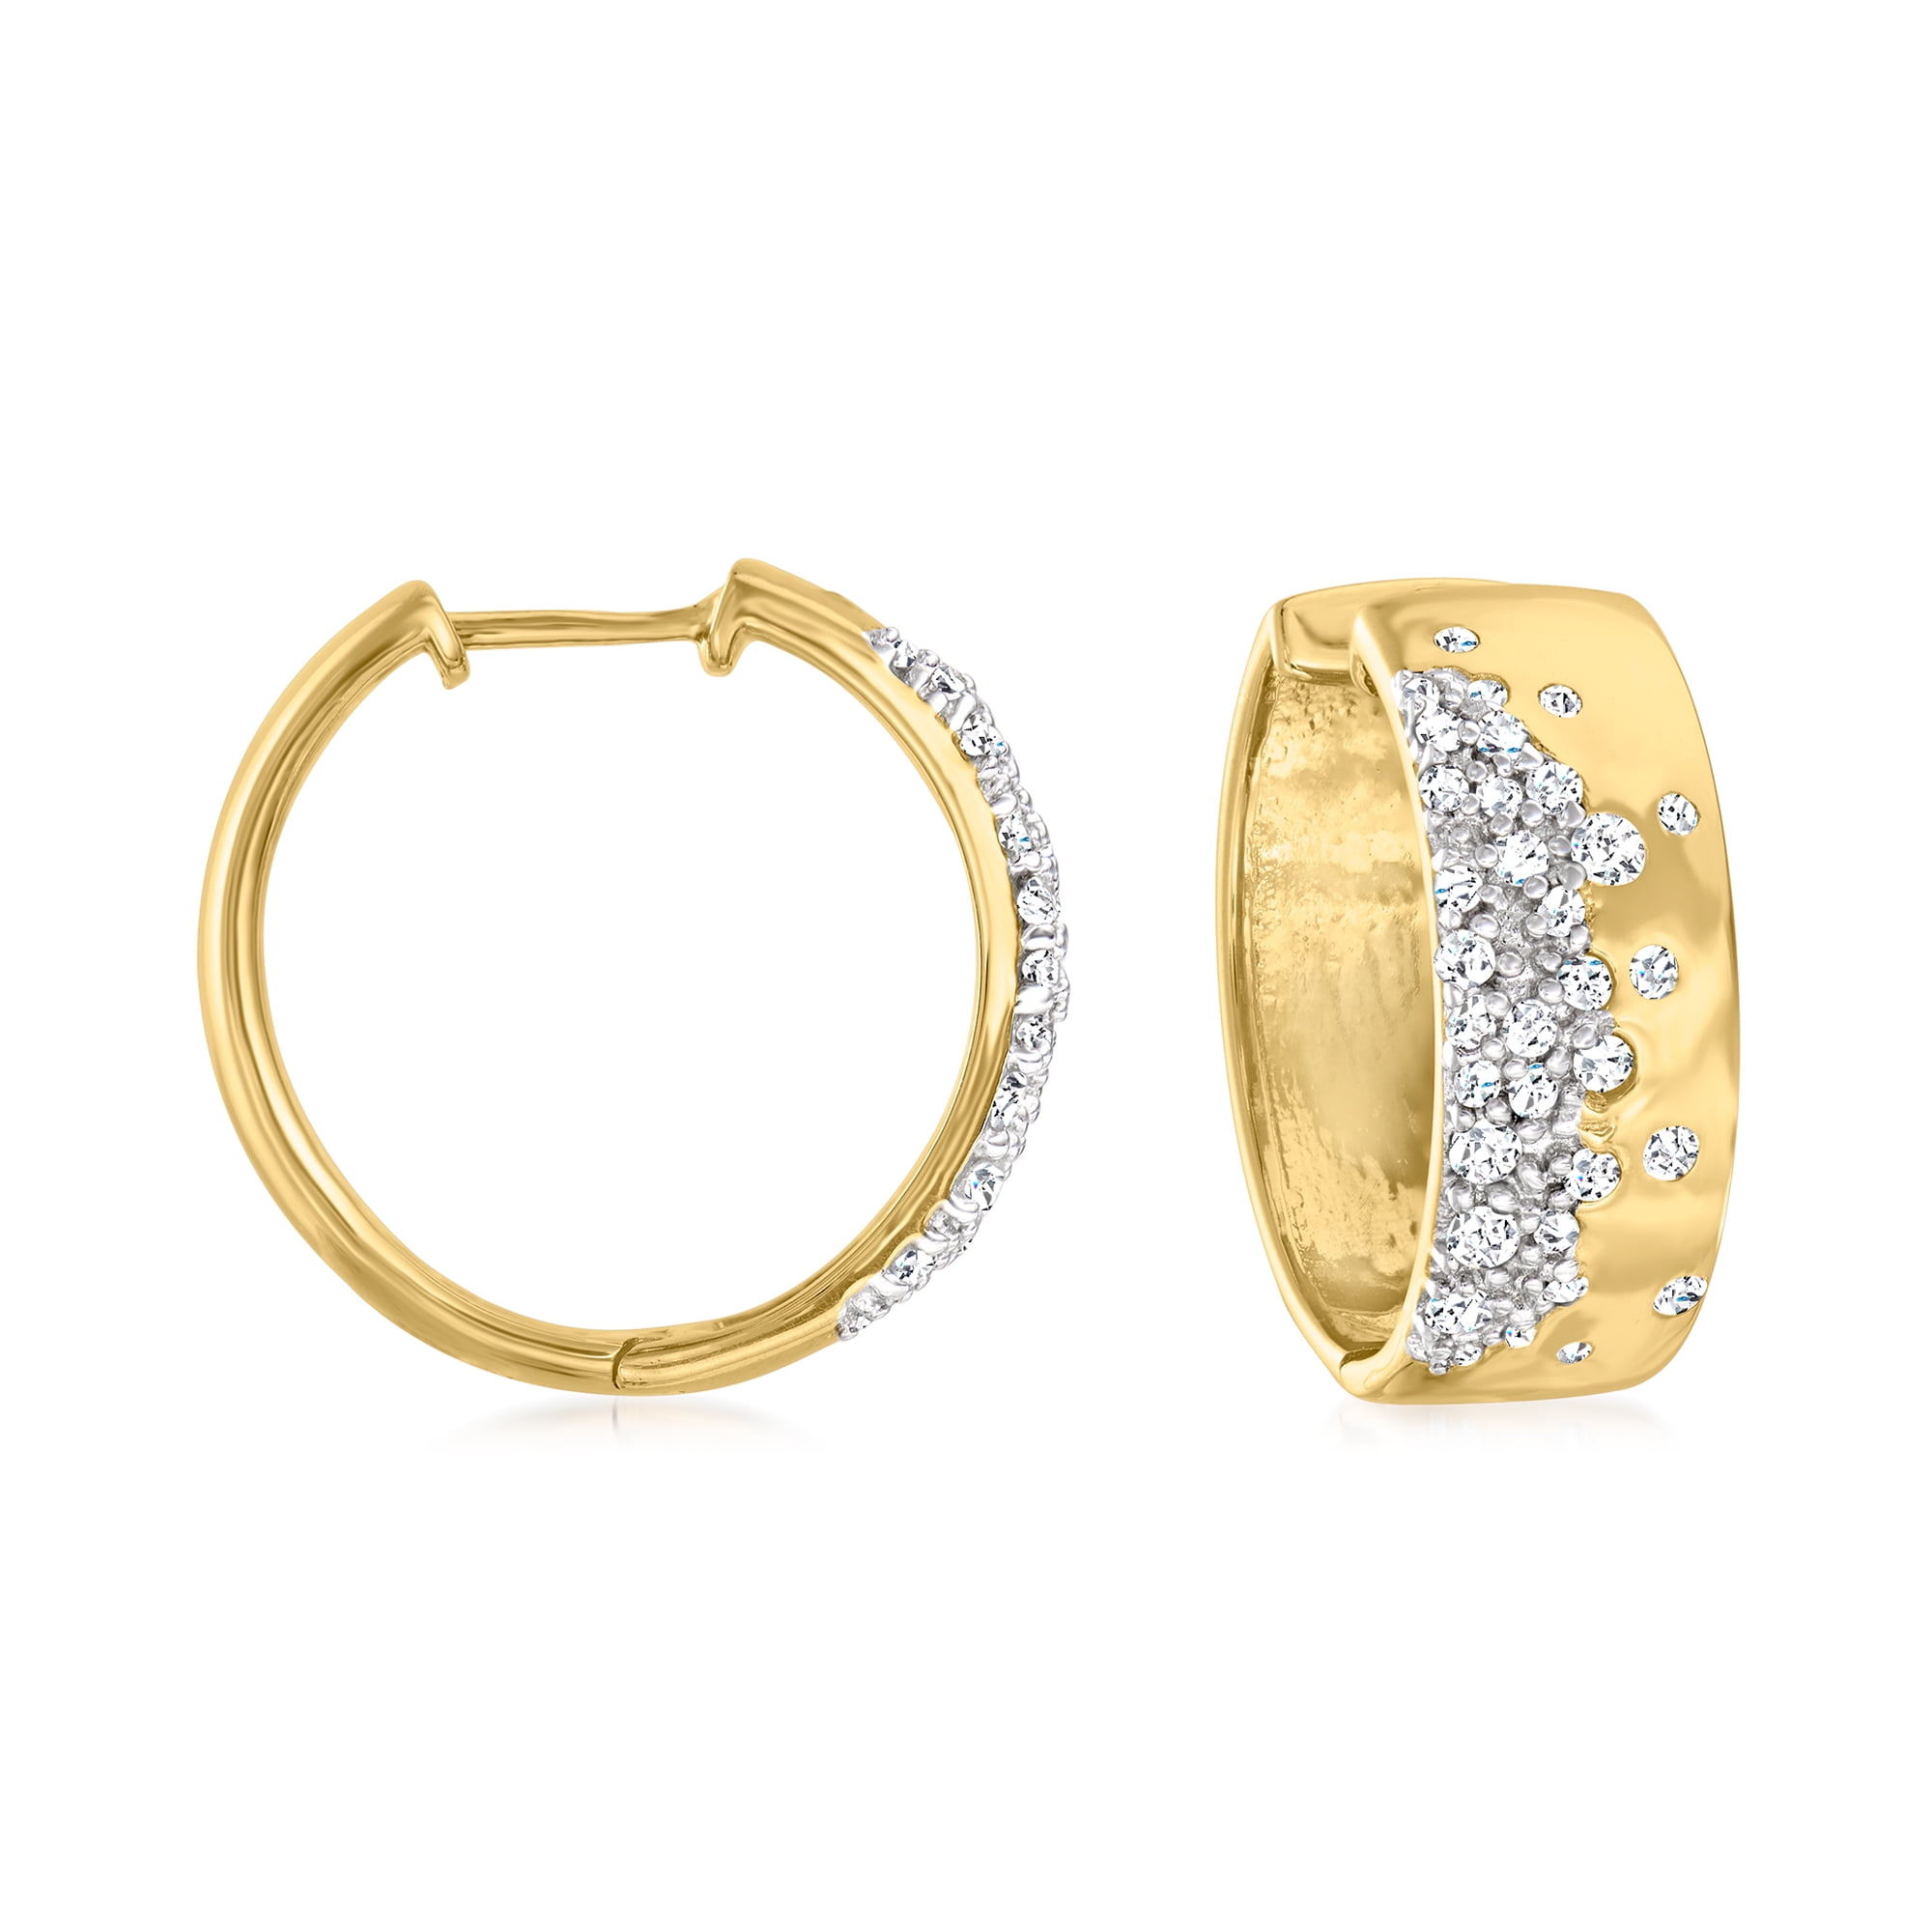 Brilliance Fine Jewelry 0.50 Carat T.W. Diamond Stud Earring in 14K White  Gold, (I-J, I2-I3) 